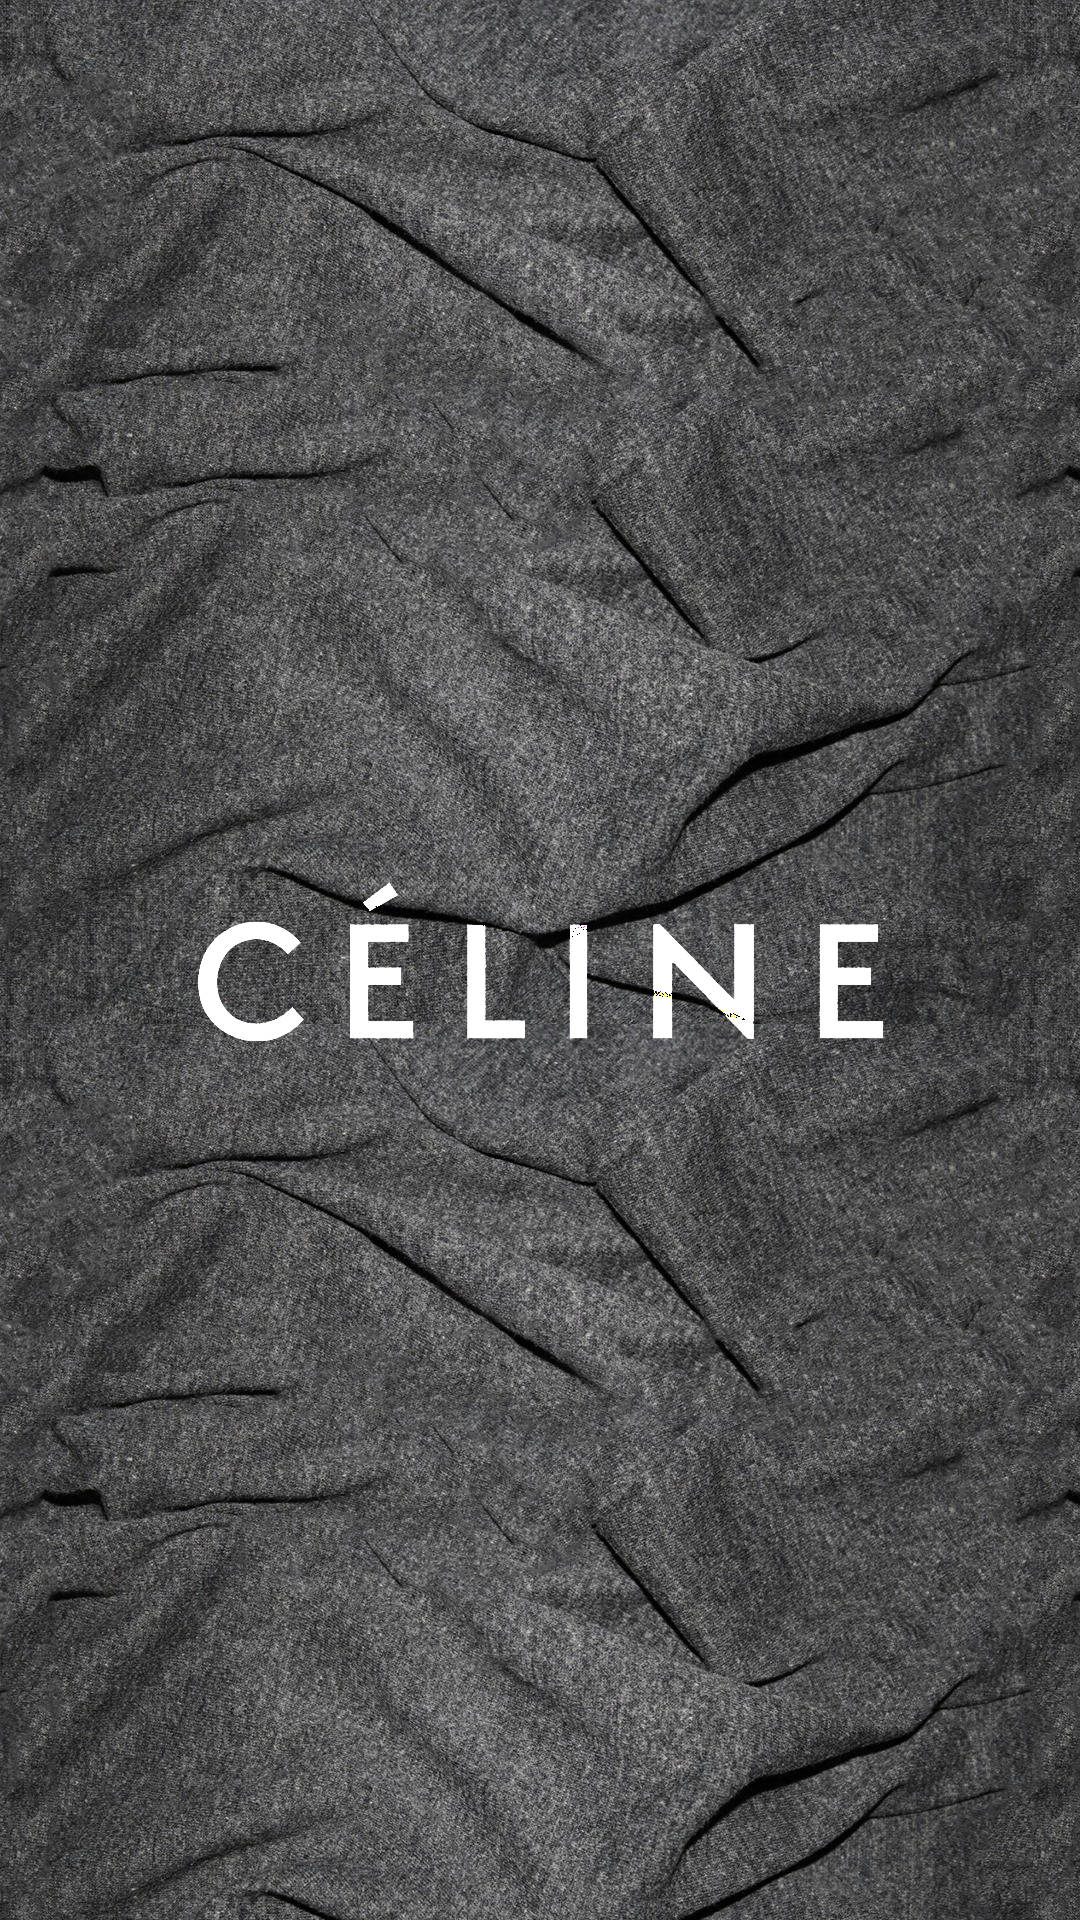 Celine Pictures Wallpaper